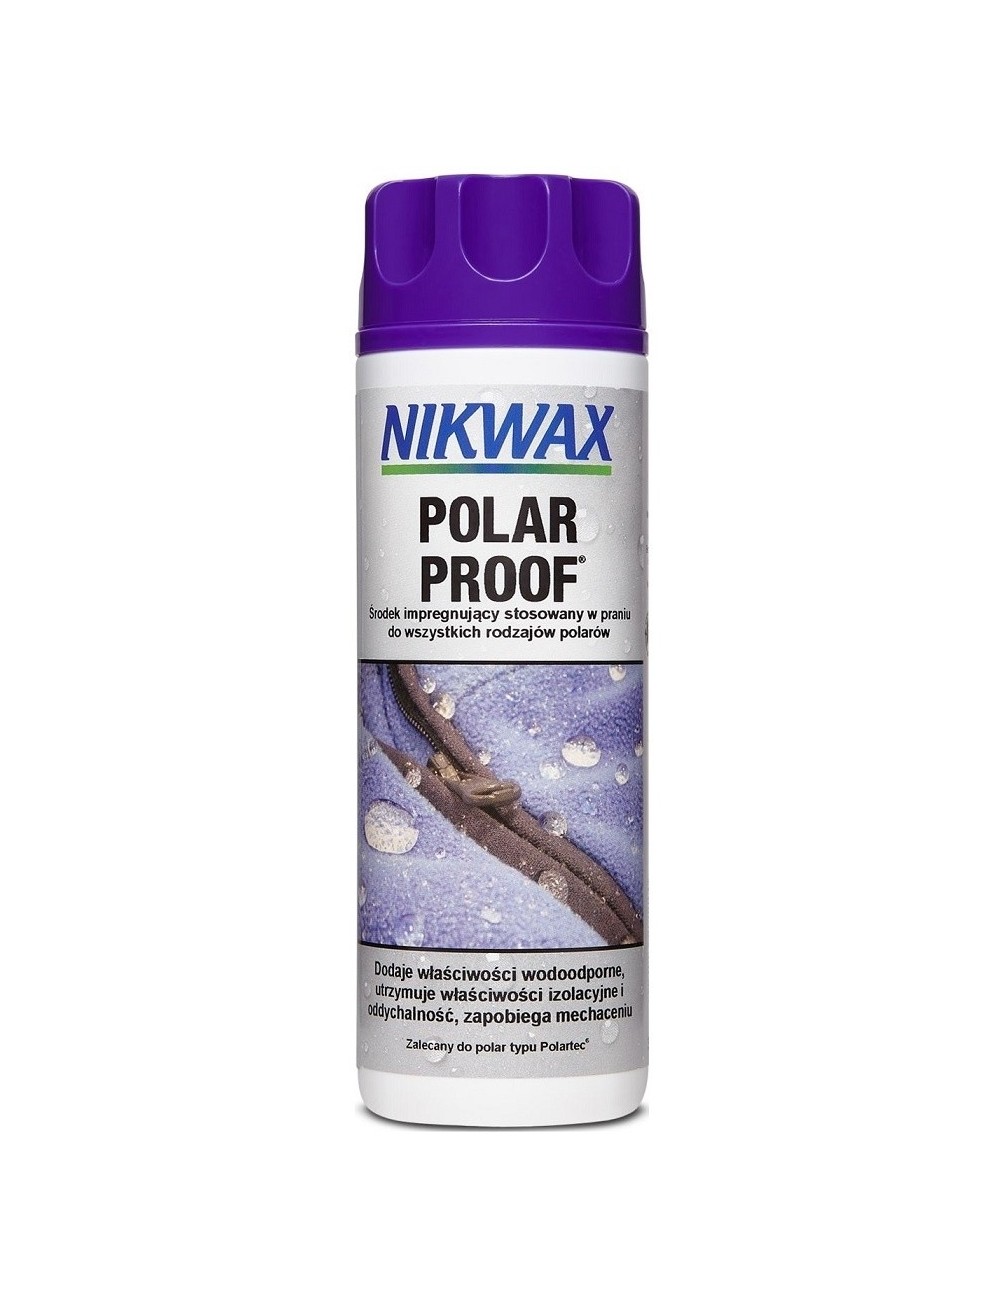 NIKWAX Polar Proof impregnation 300ml